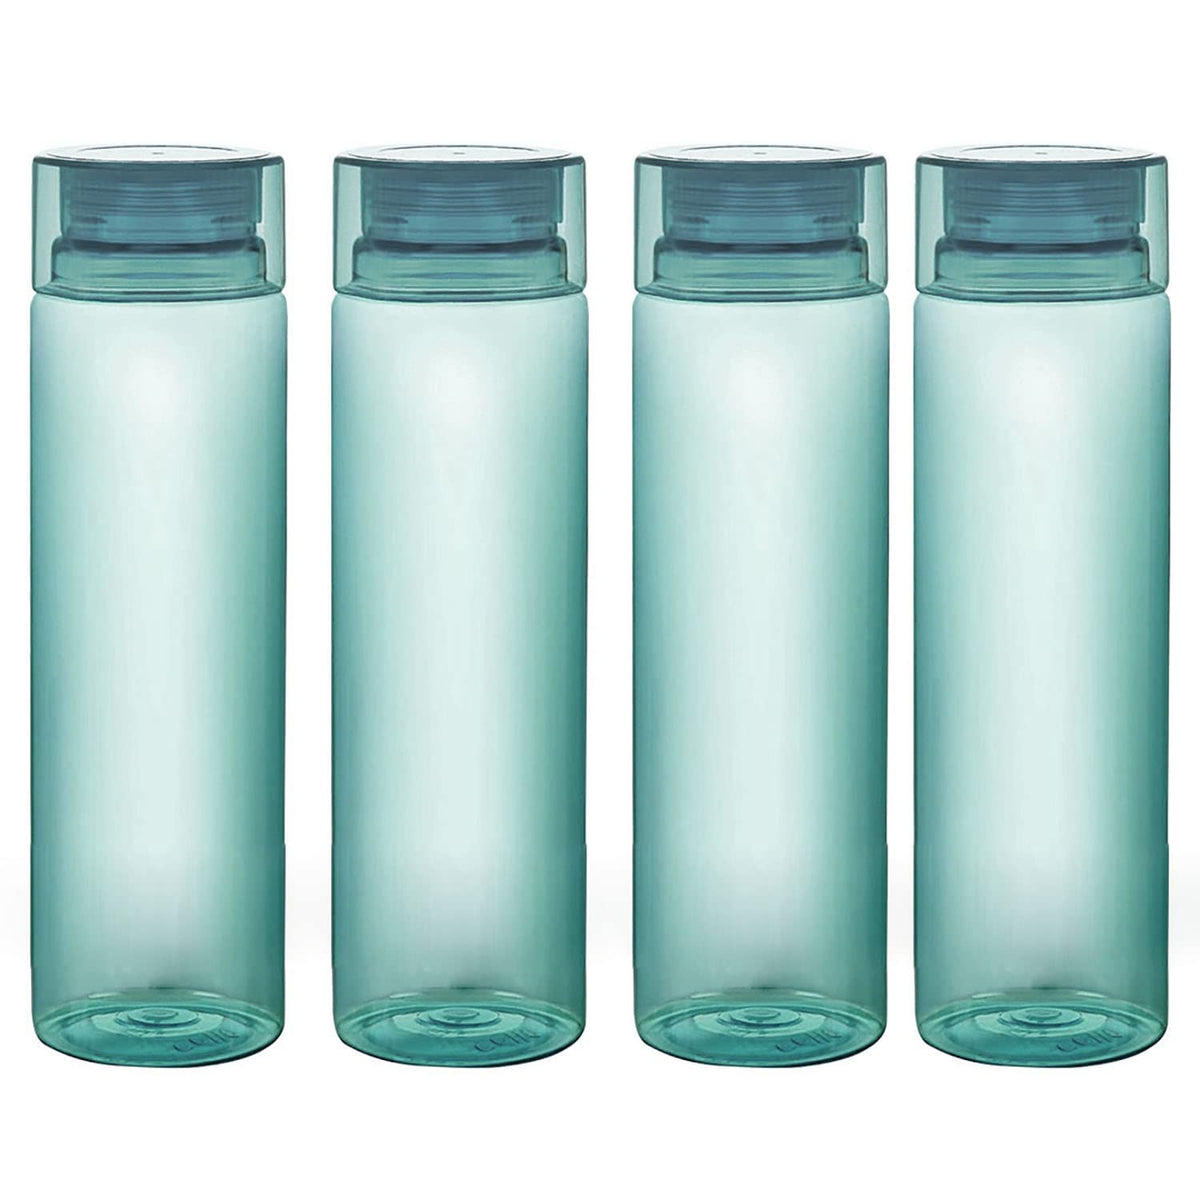 Urbane Home BPA Free Plastic Water Bottles | Breakproof, Leakproof, Food Grade PET Bottles | Water Bottle for Kids & Adults | Plastic Bottle Set of 4 |Green